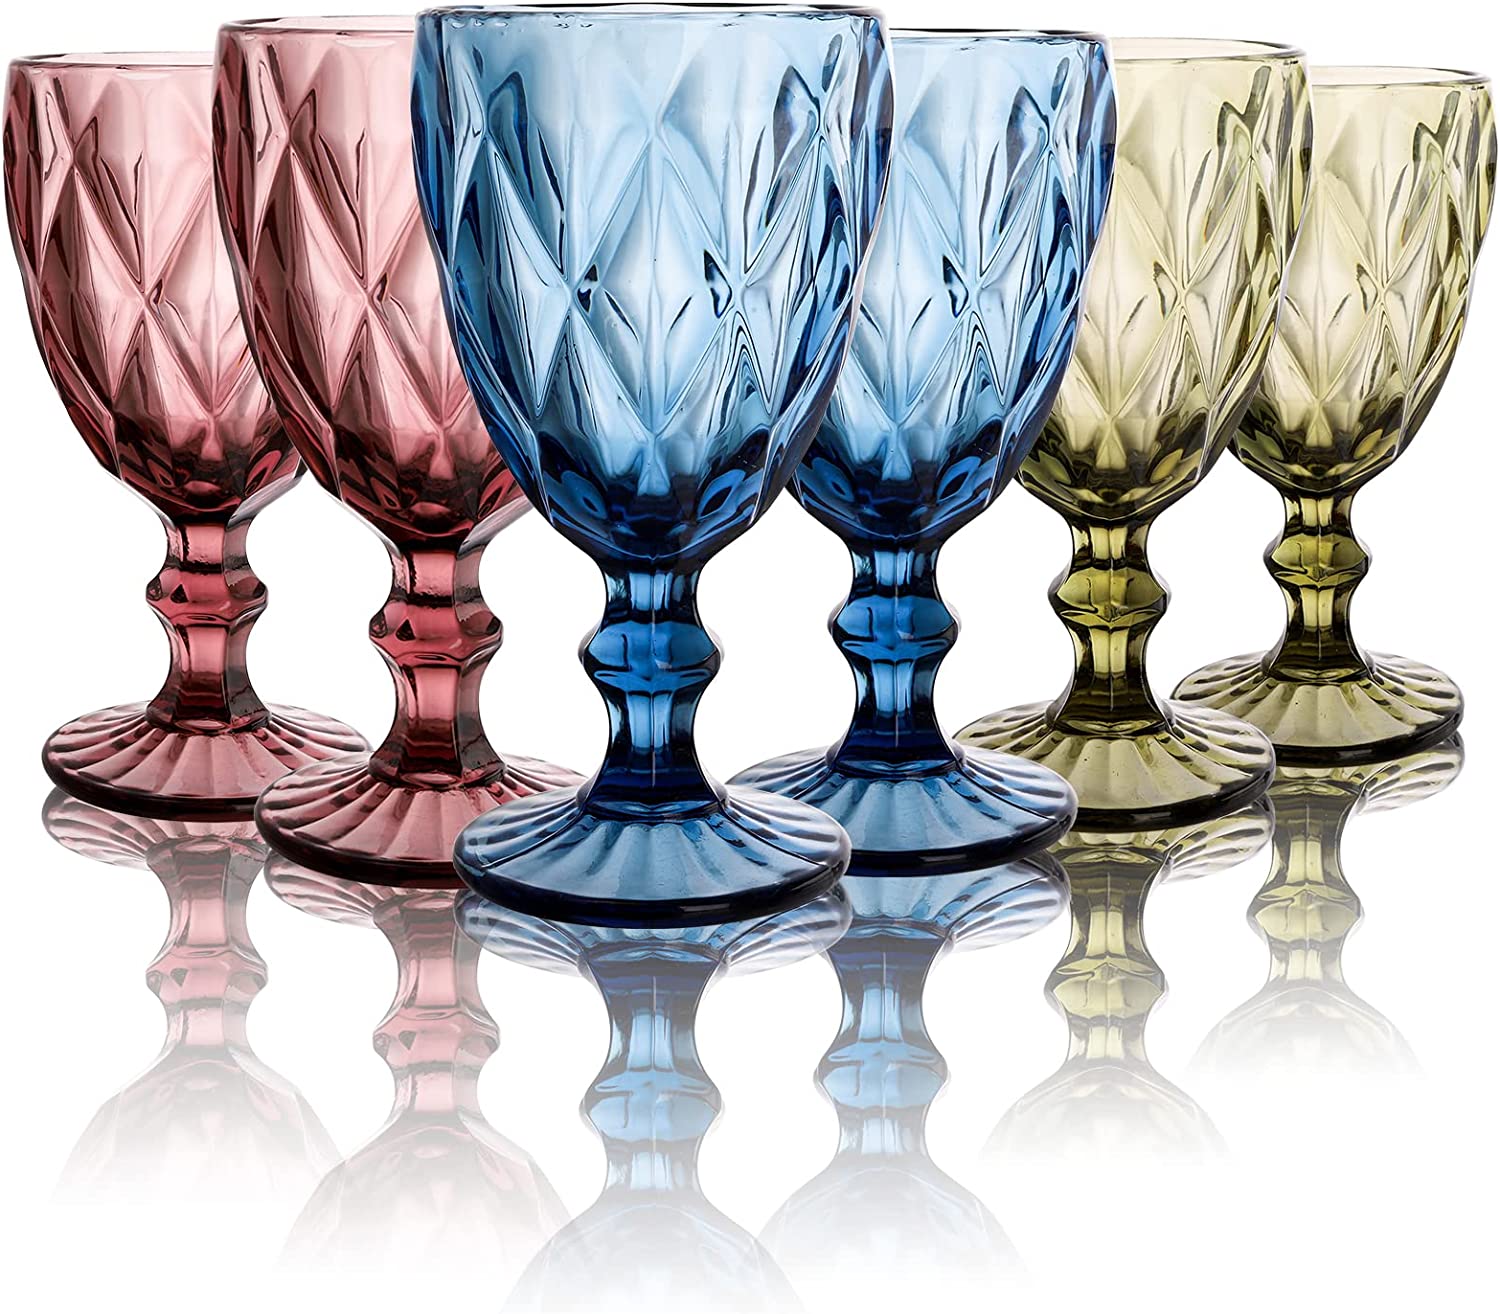 Bardot Vintage studded Wine Glasses - Lollygag